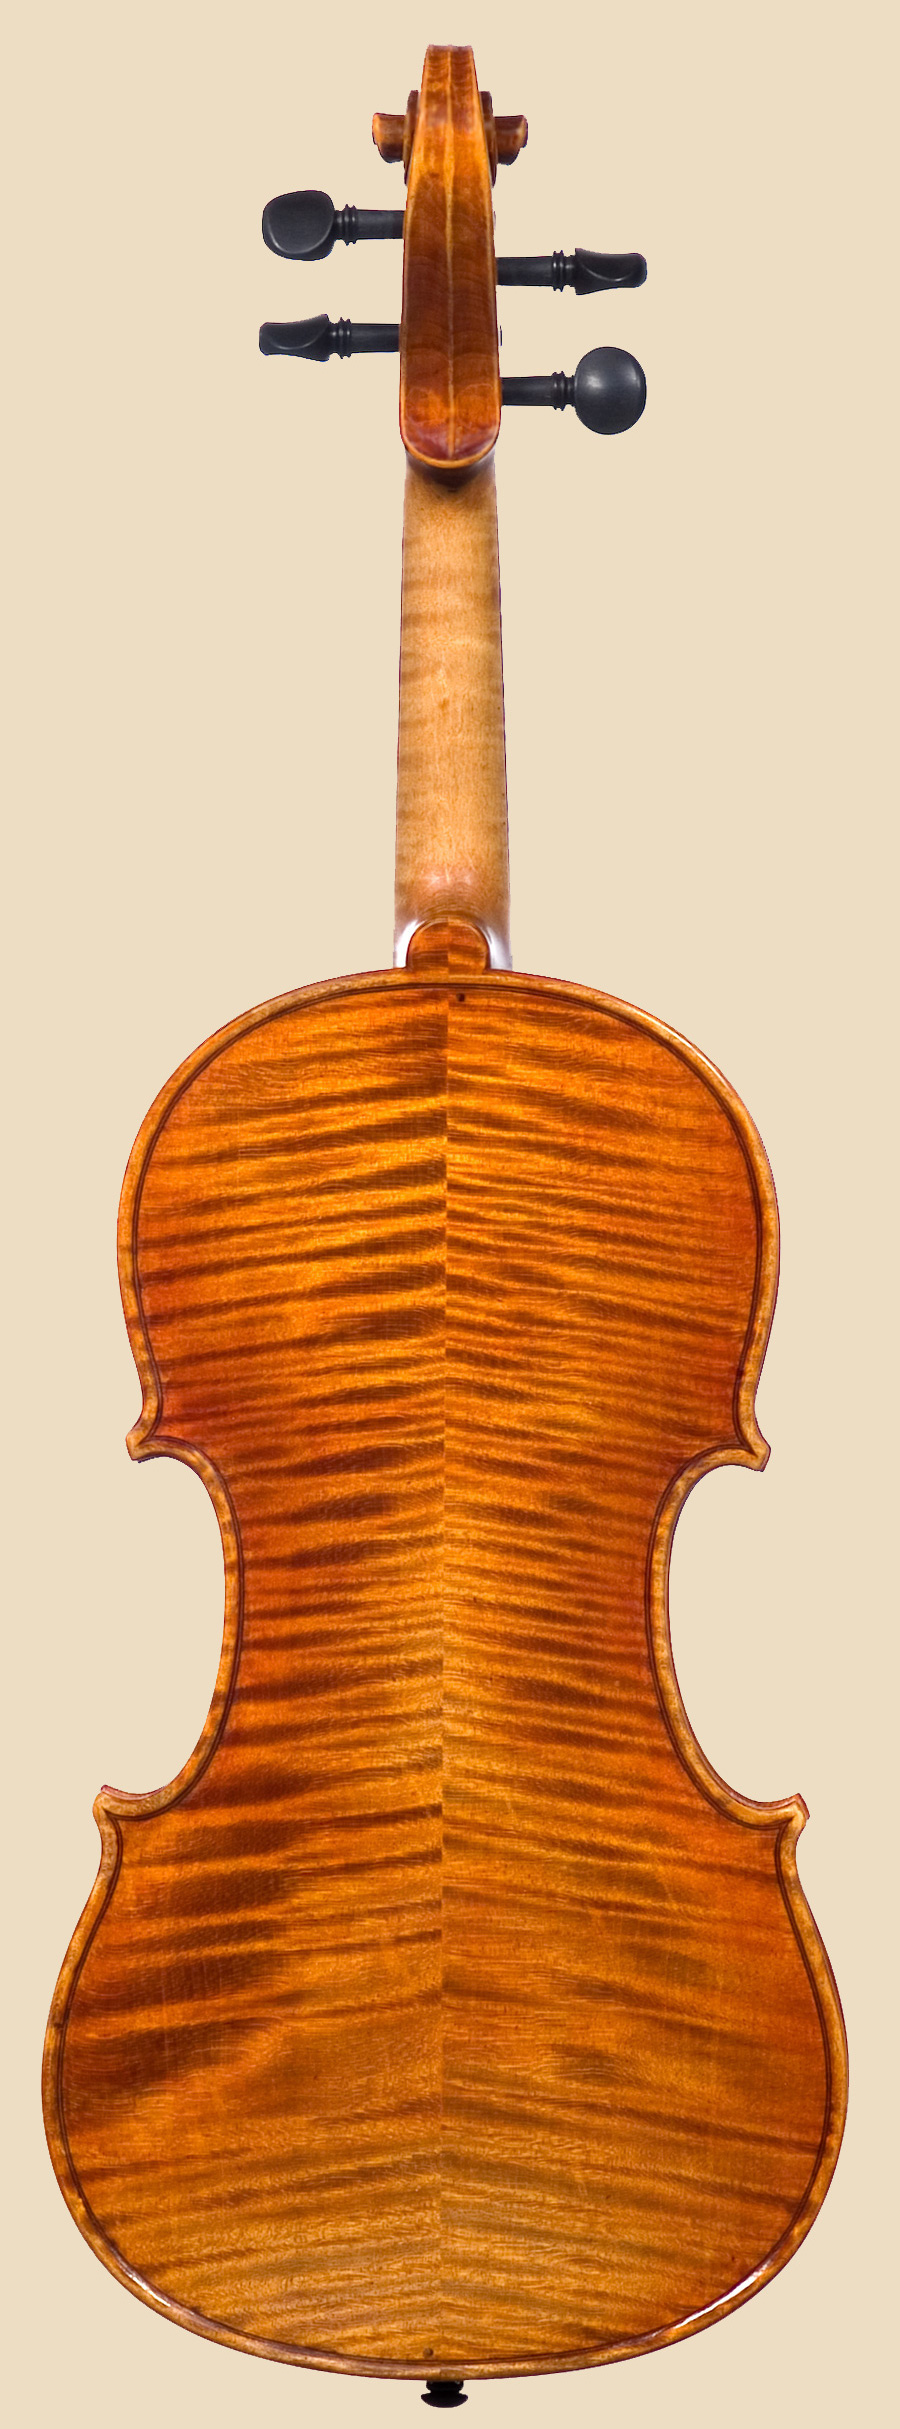 andrzej swietlinski violin